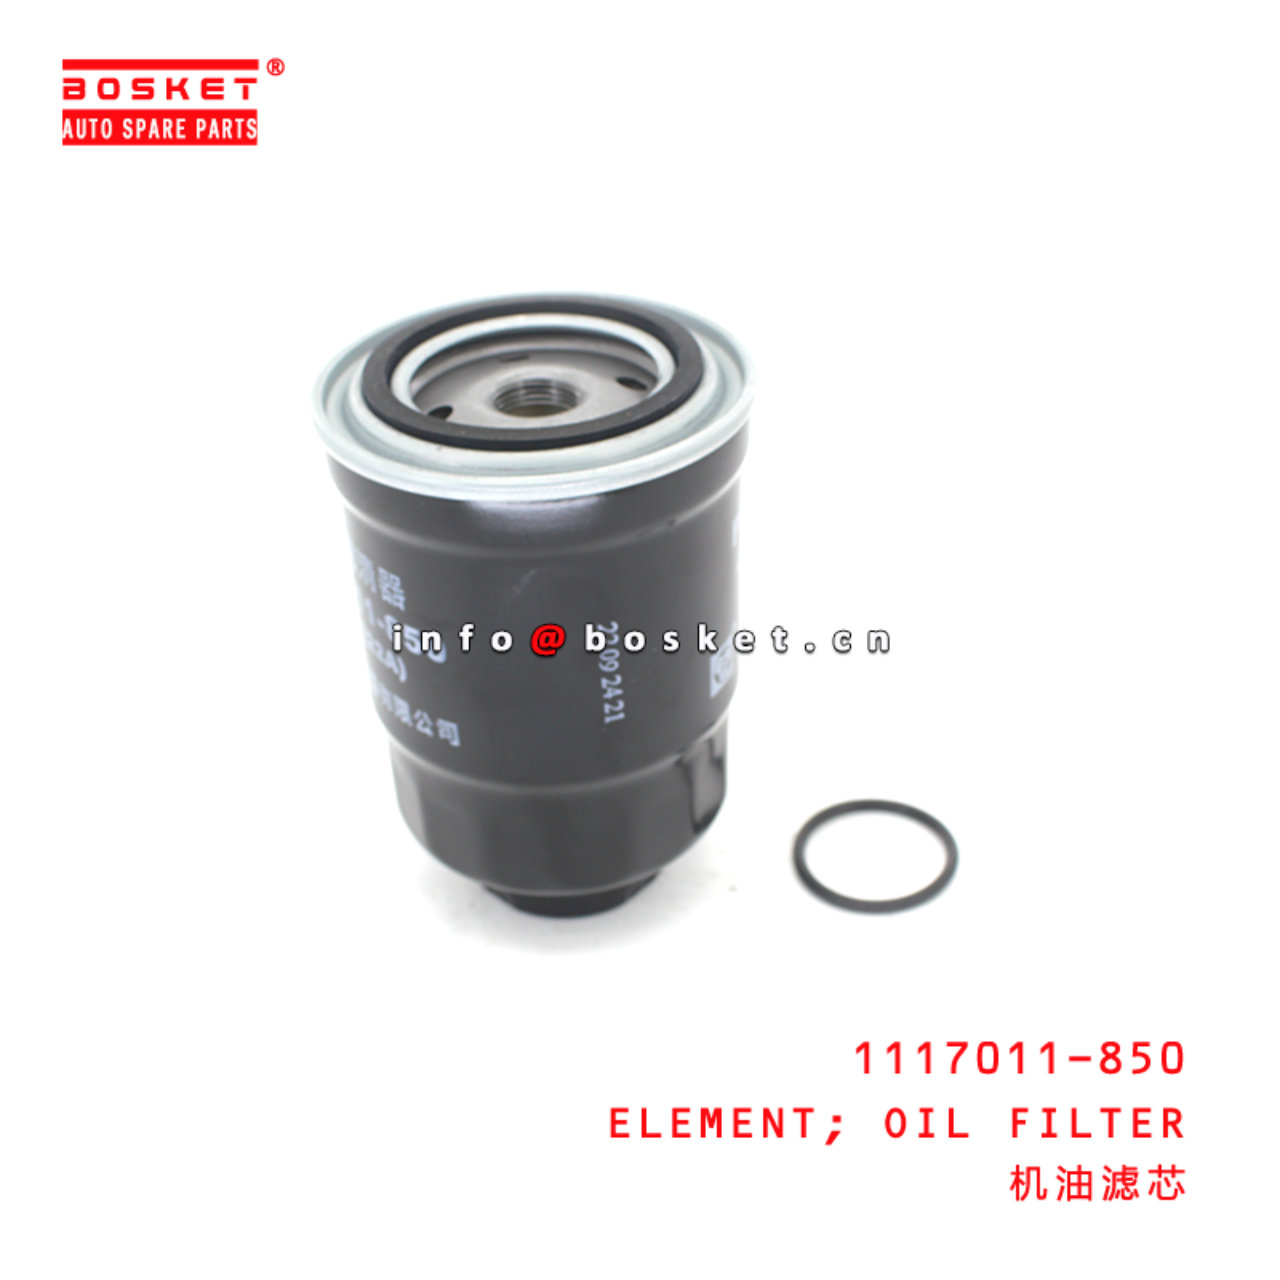 1117011-850 Oil Filter Element suitable for ISUZU NKR77 P600 1117011-850